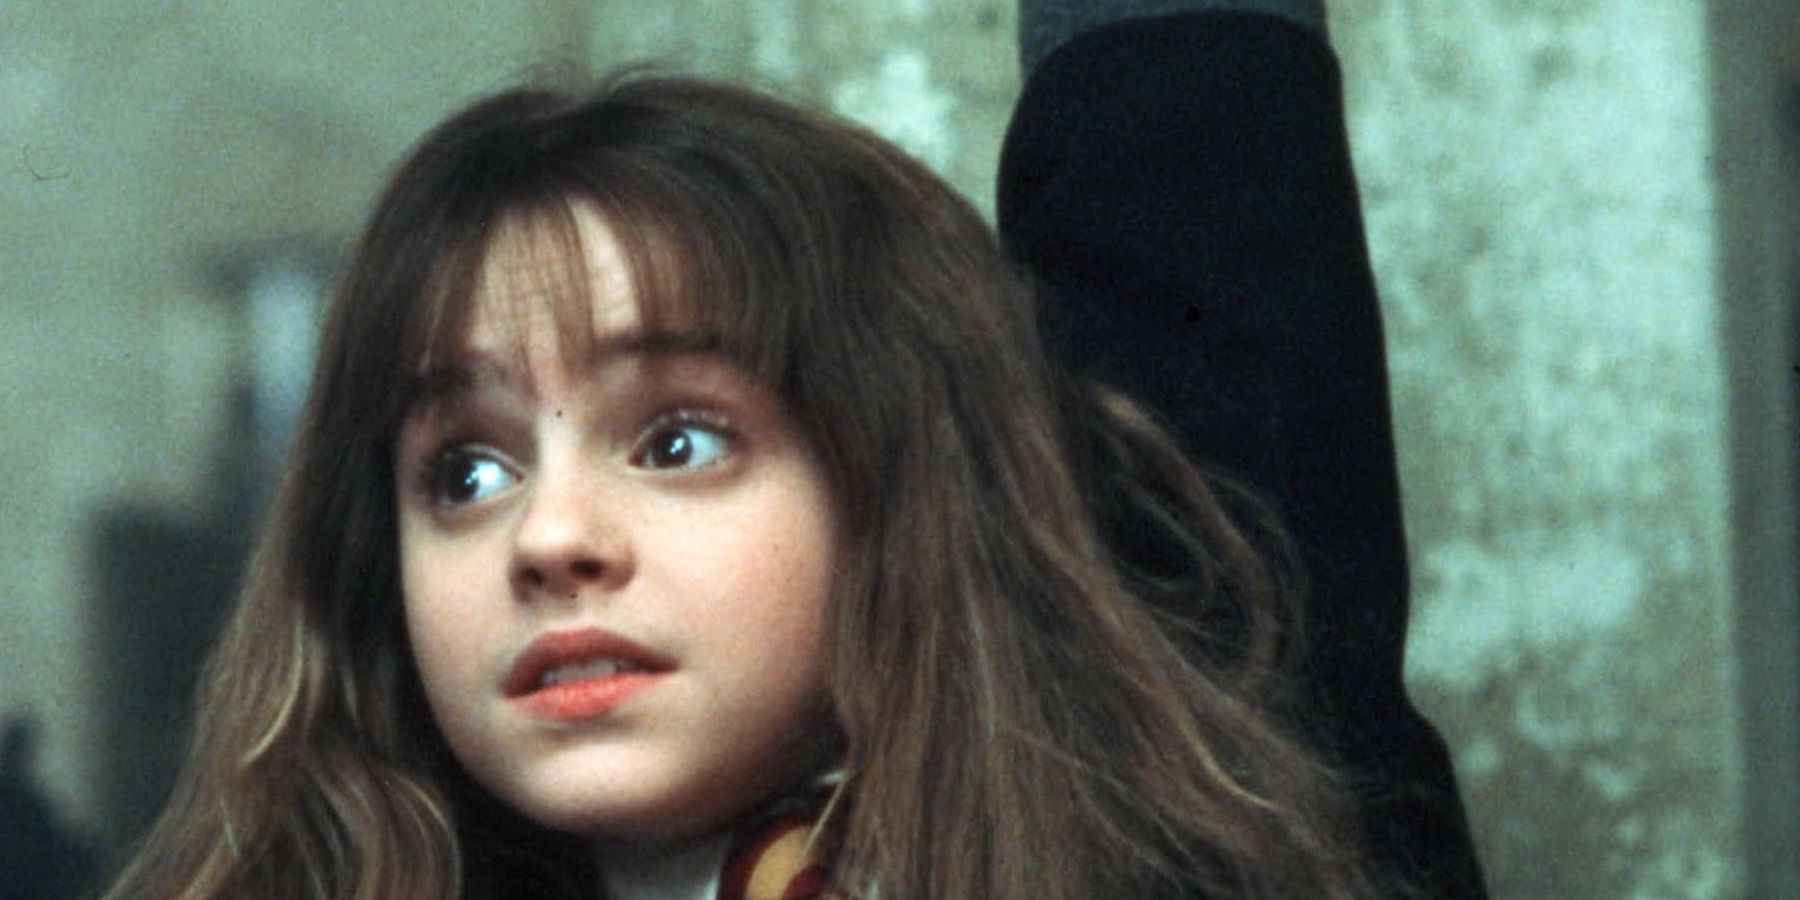 Emma Watson as Hermione Granger Raising Hand in Class